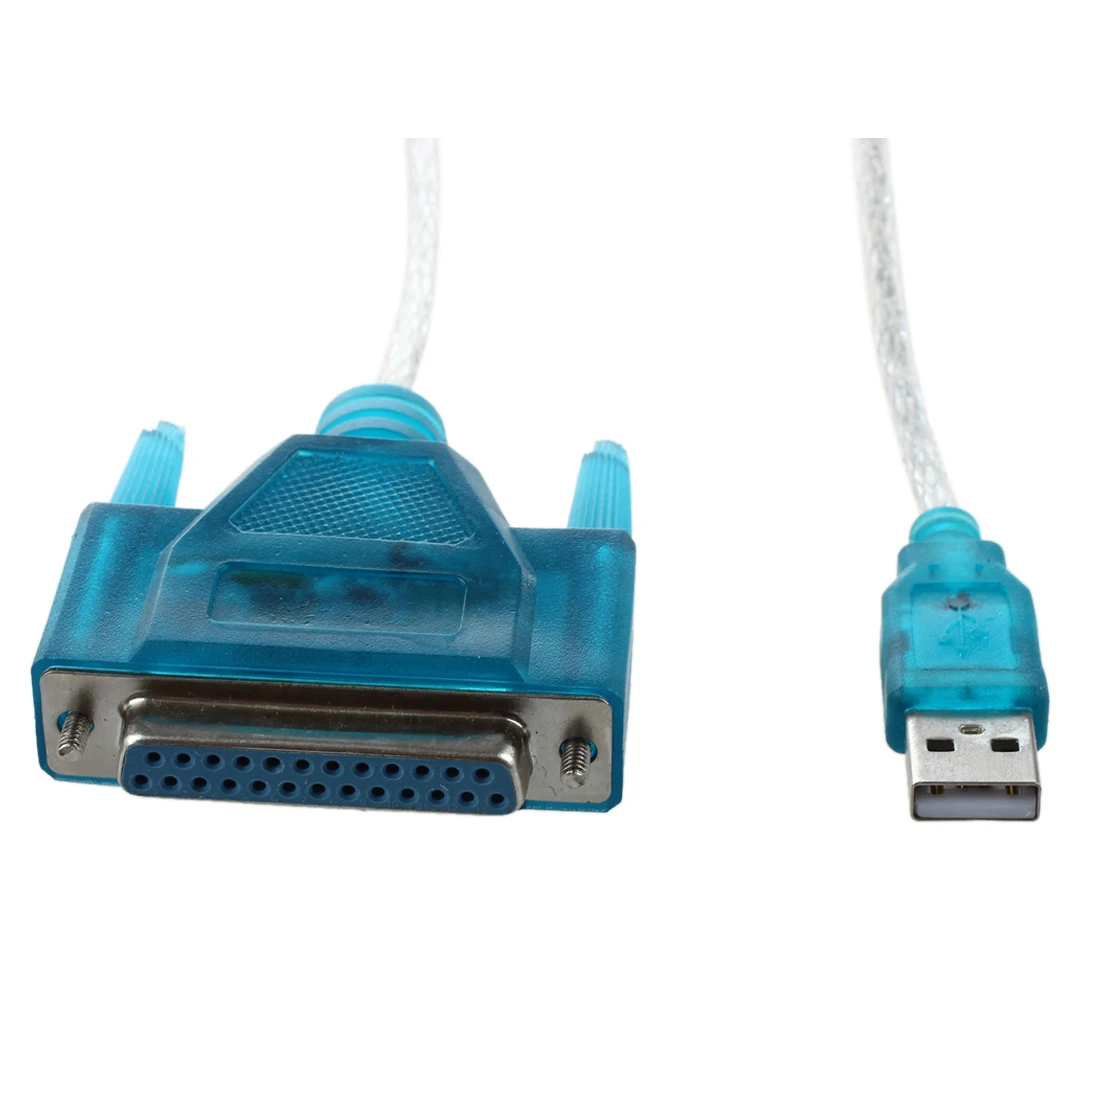 USB a la Impresora DB25 Puerto Paralelo de 25 Pines Adaptador de Cable . ' - ' . 2